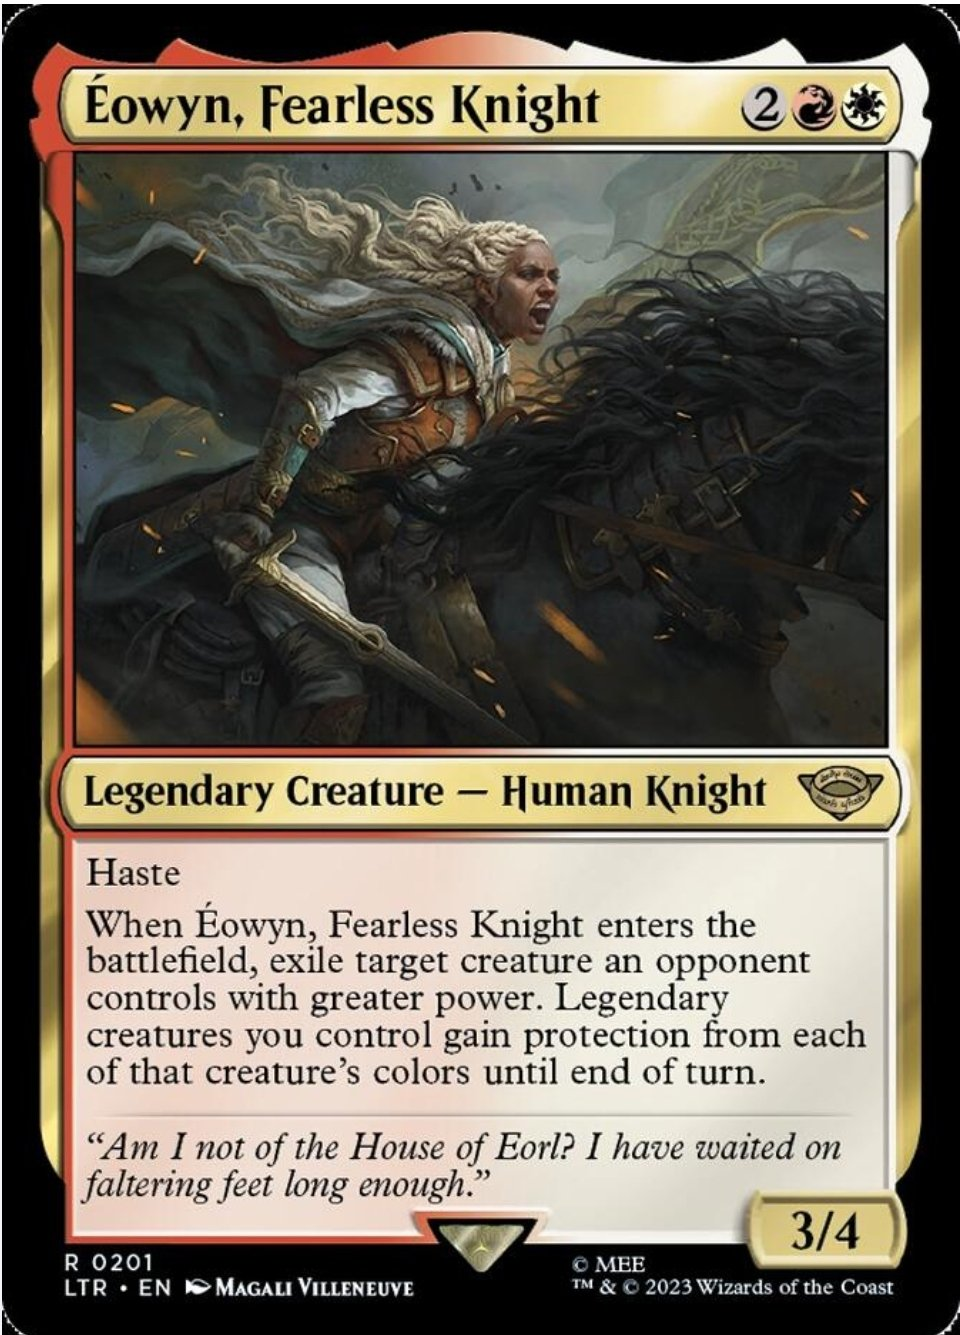 Eowyn, Fearless Knight. Magic the Gathering card.